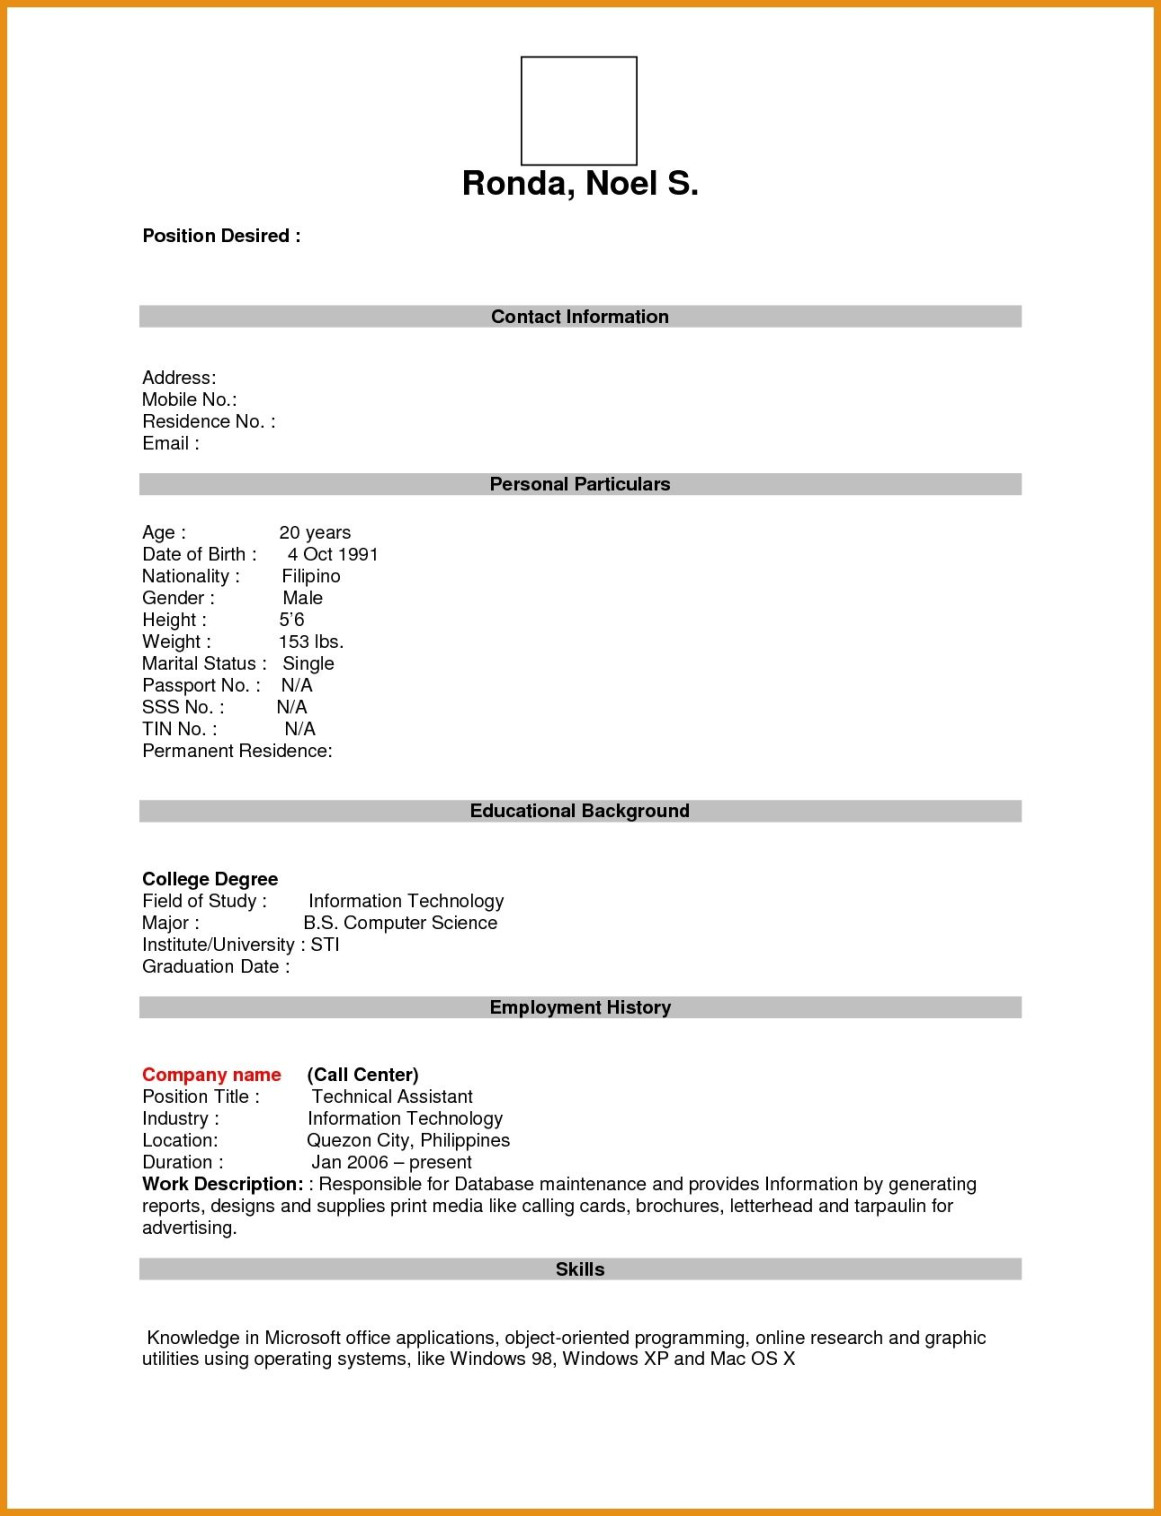 Resume Format Blank - Resume Format  Job resume template, Simple